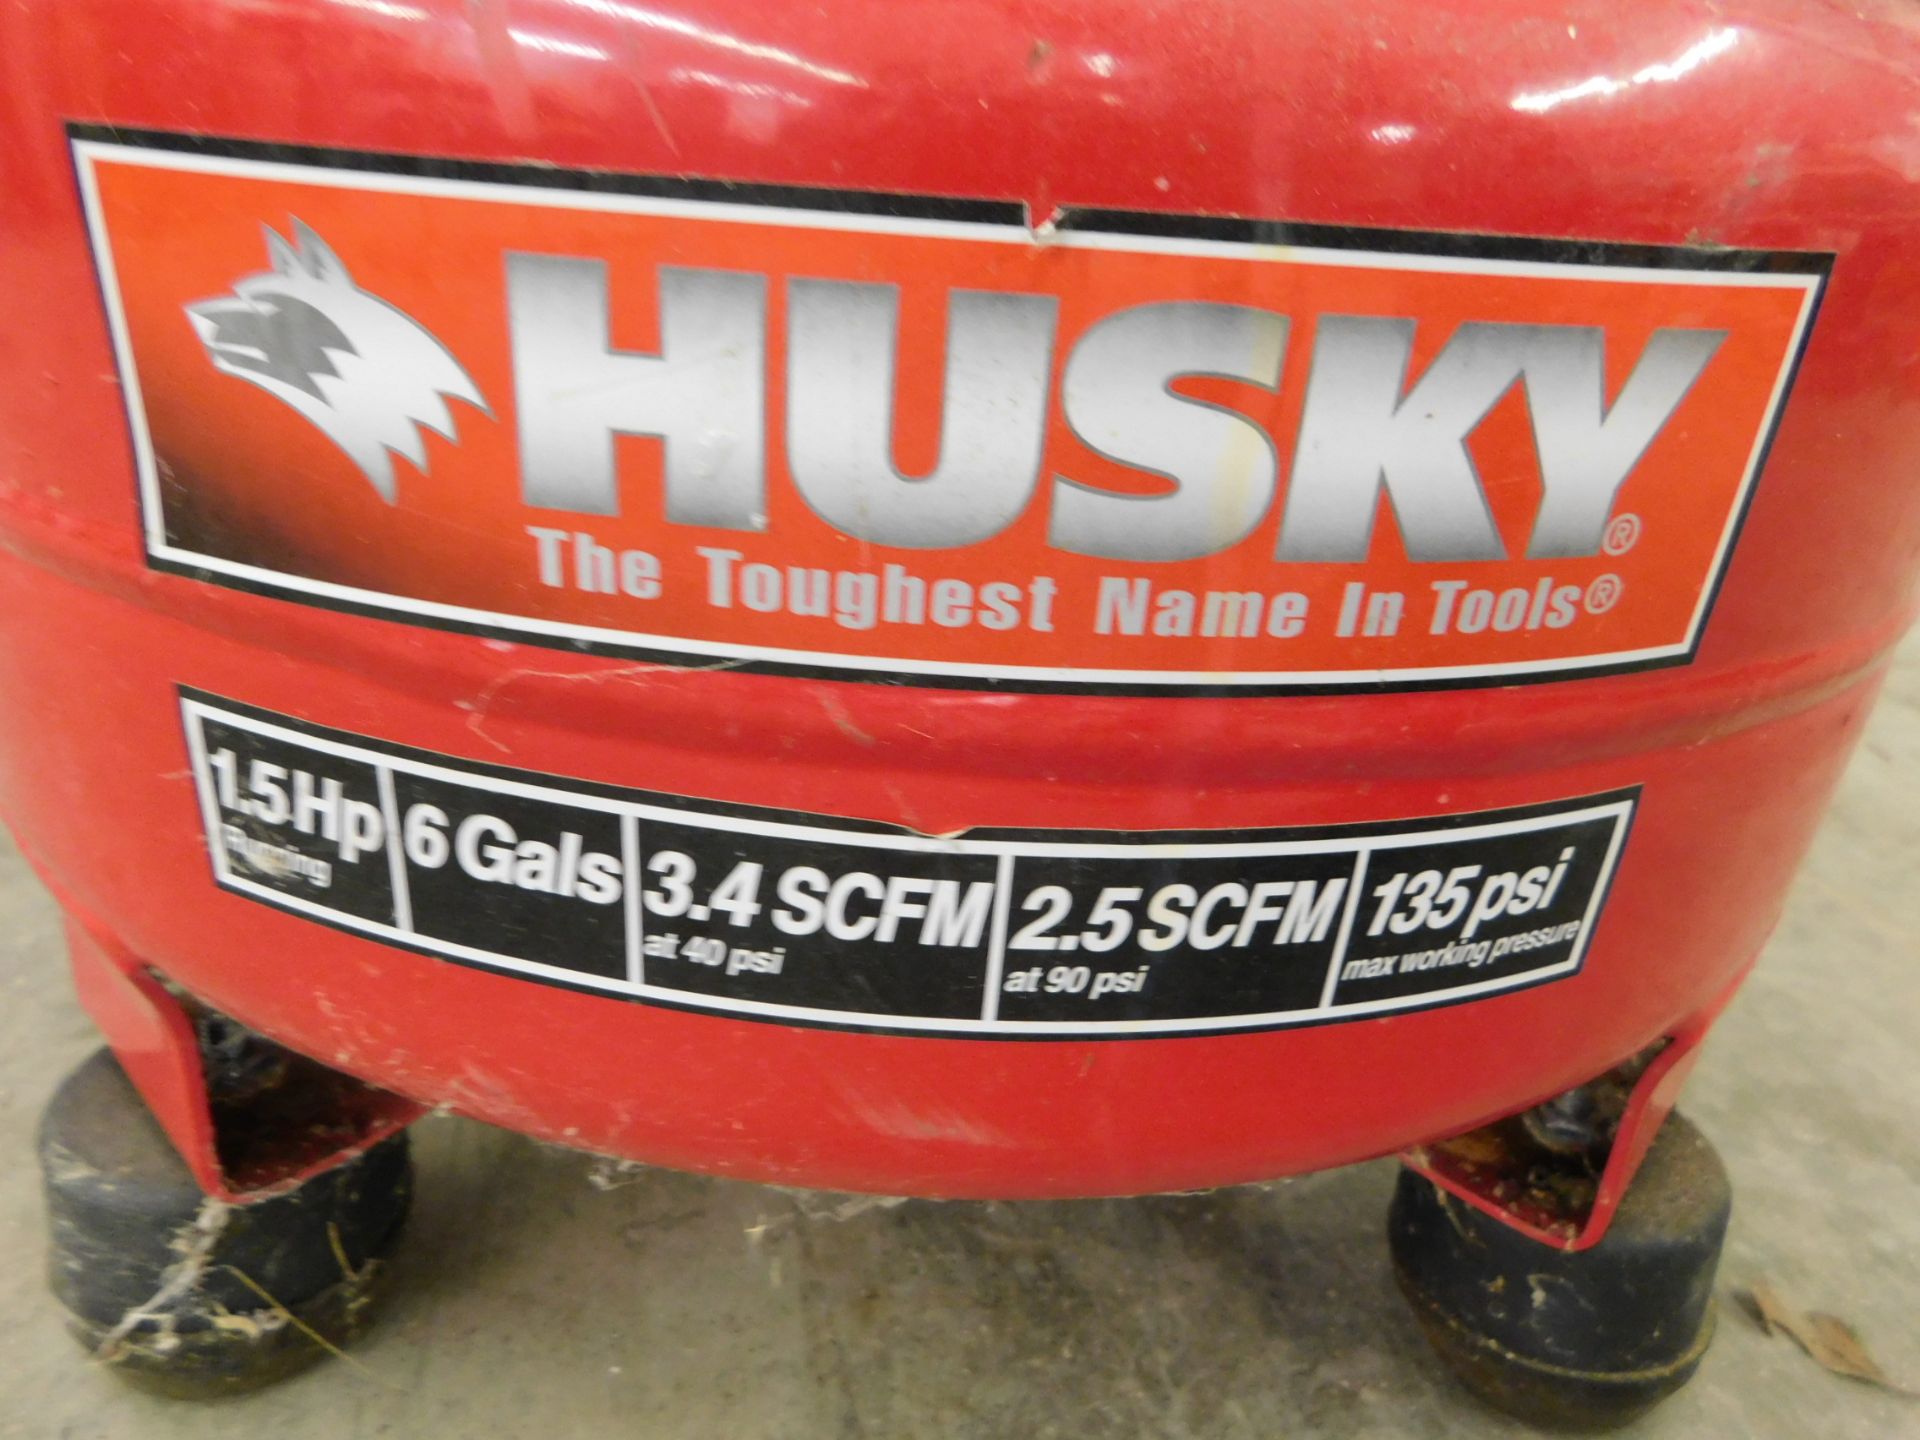 Husky 1.5 HP Portable Air Compressor, 6 Gallon Tank - Image 2 of 3